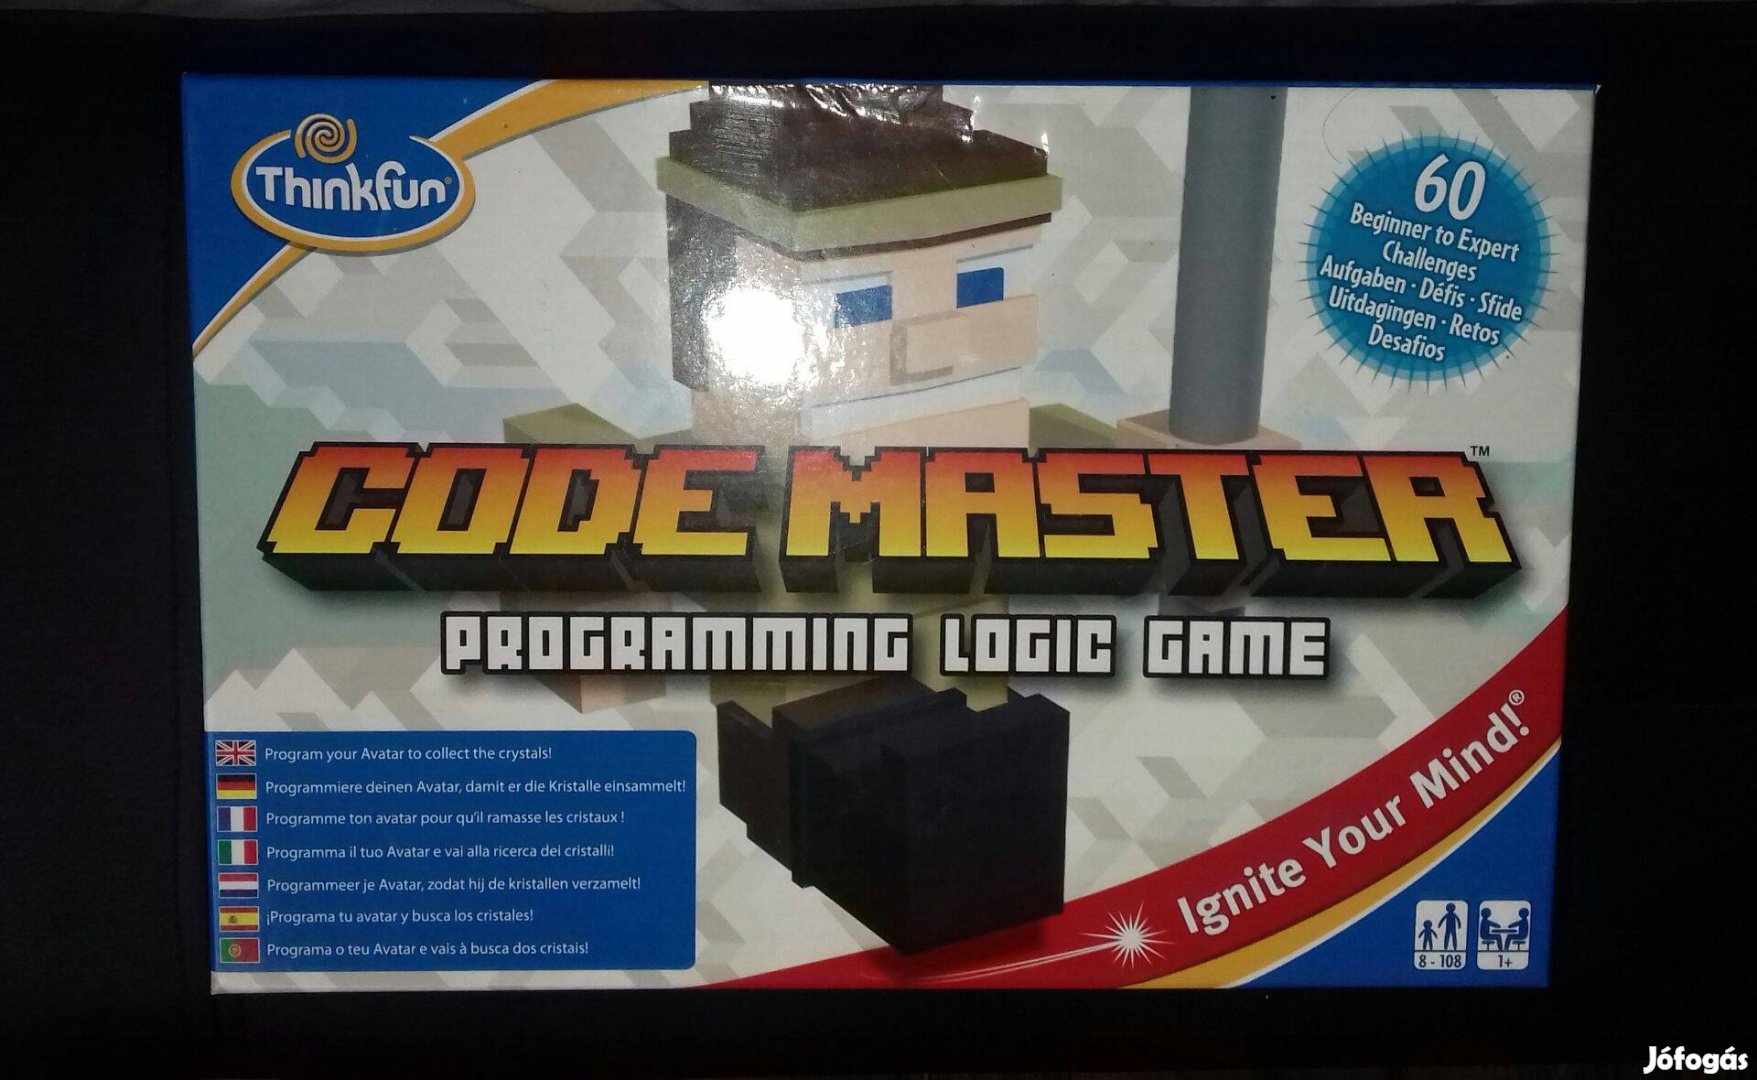 Code master programozói logikai játék, Thinkfun Új